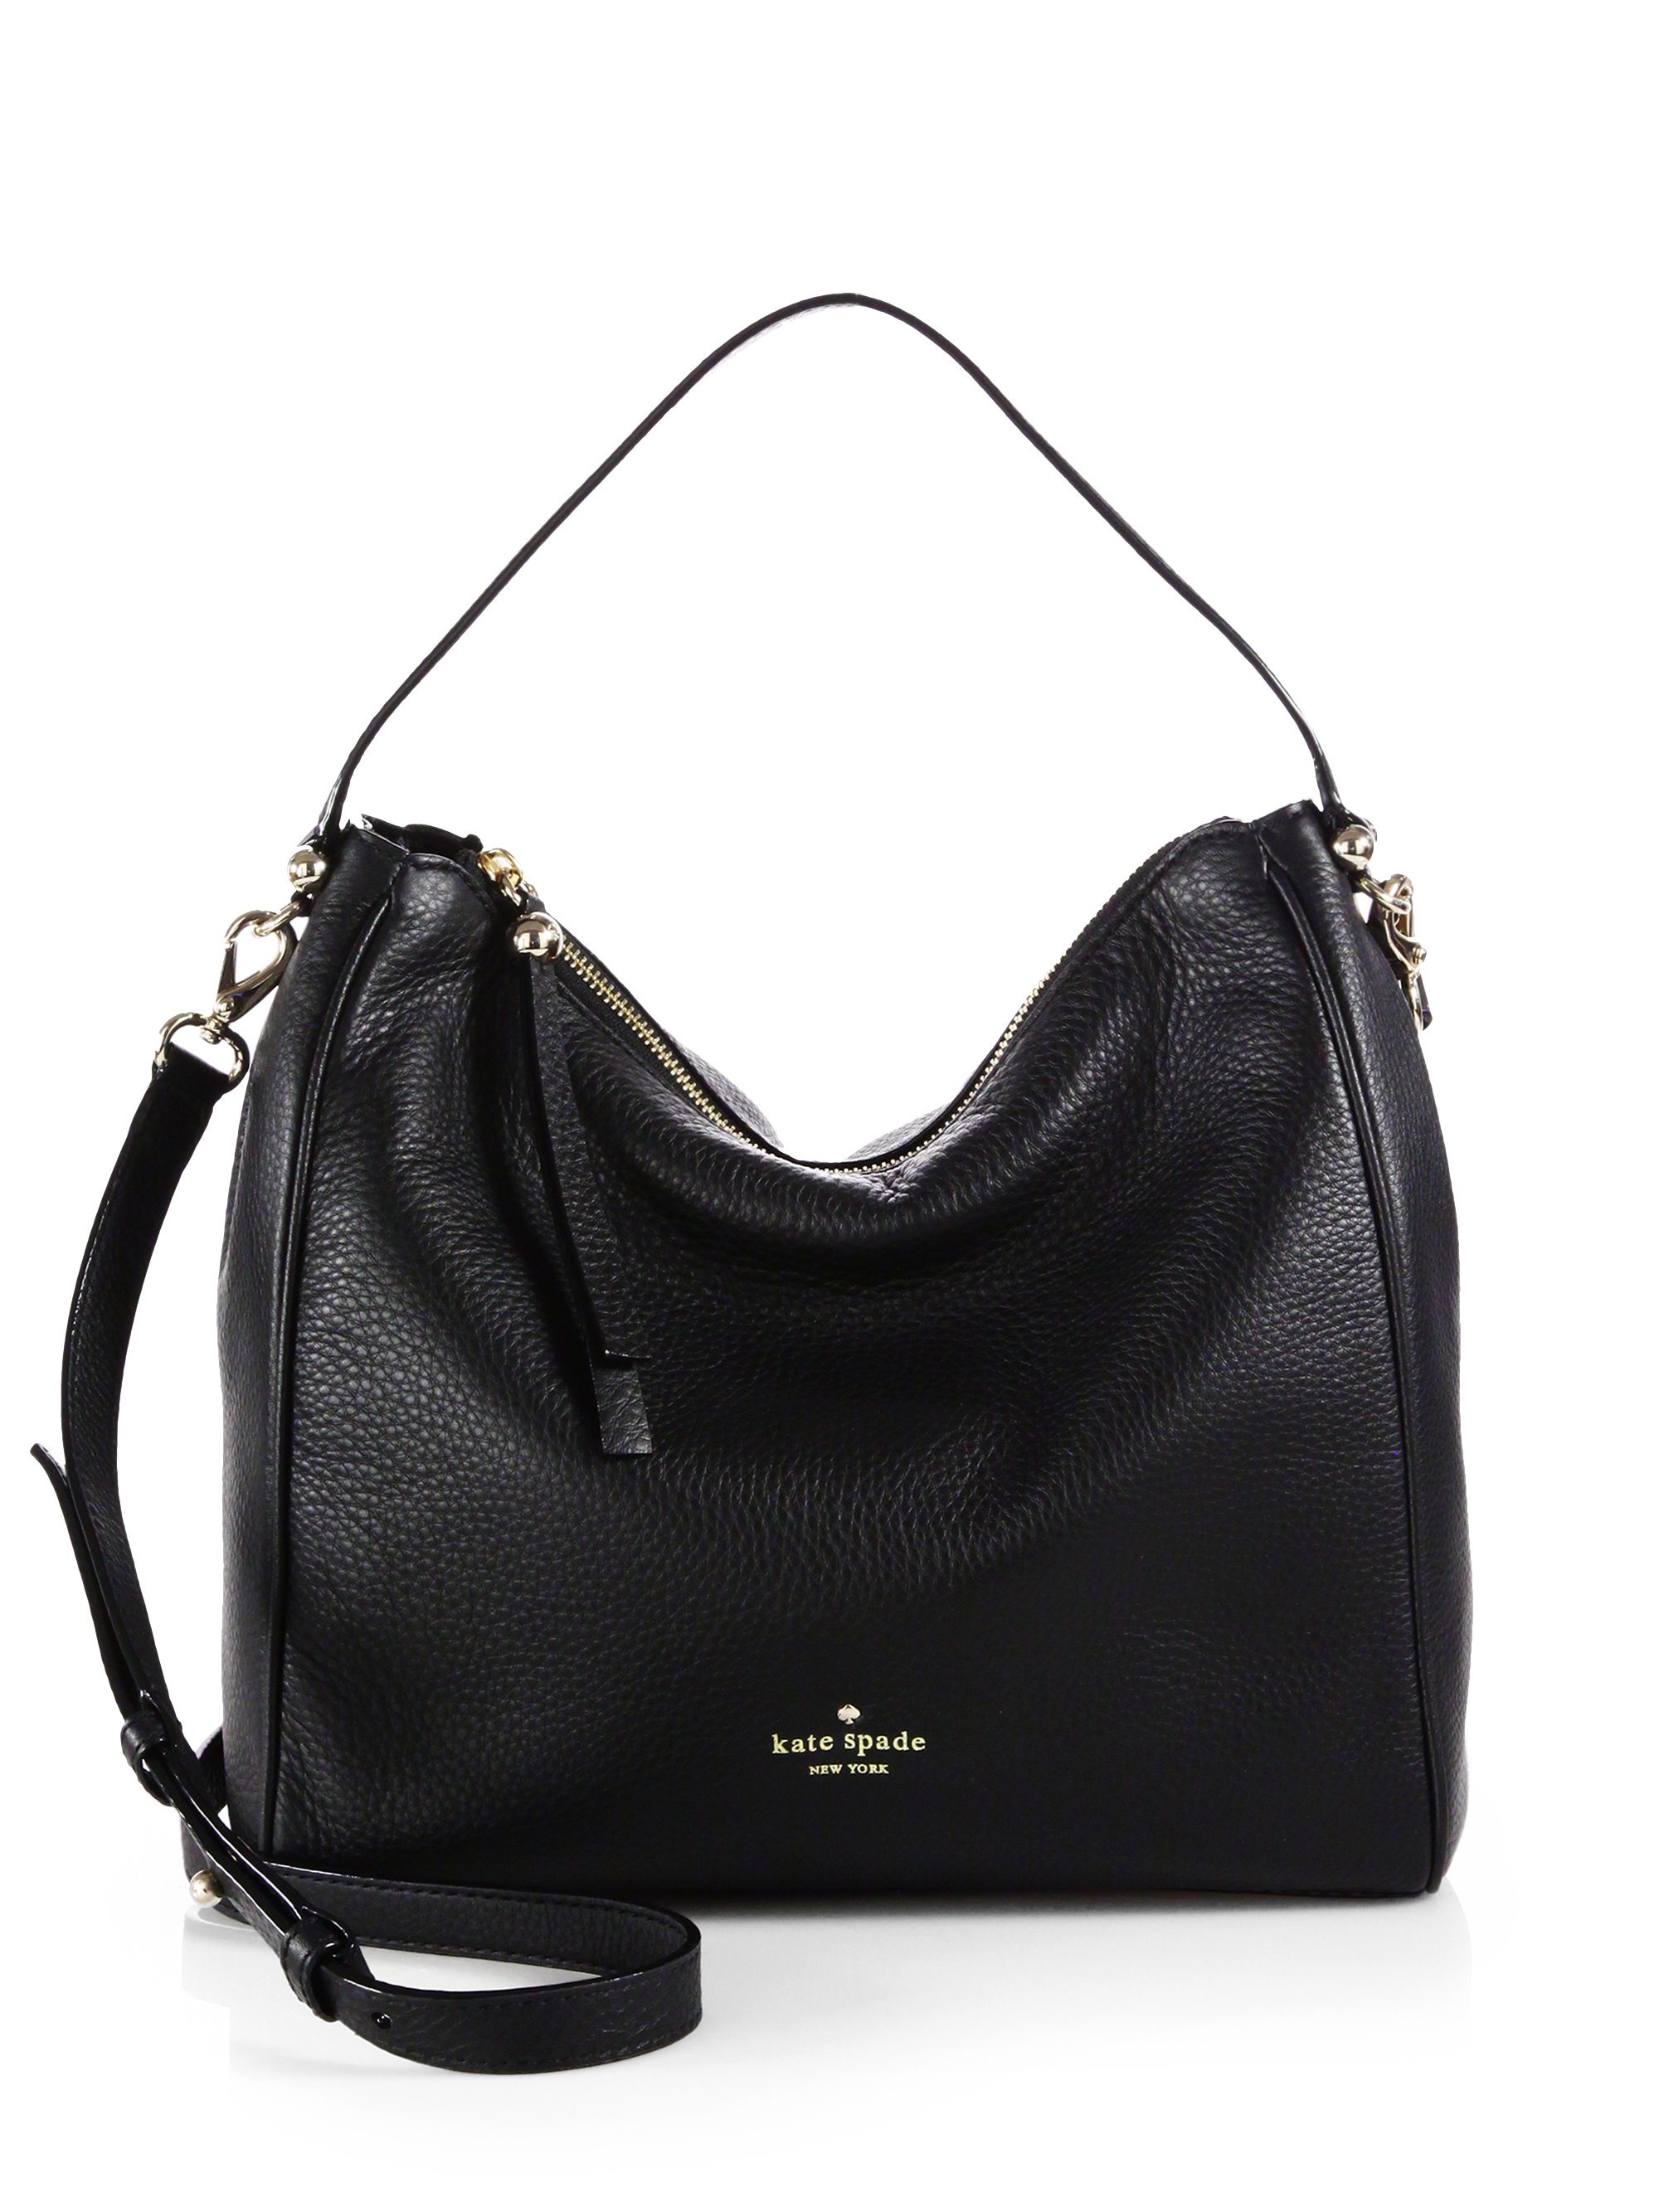 Lyst - Kate Spade New York Charles Street Haven Shoulder Bag in Black